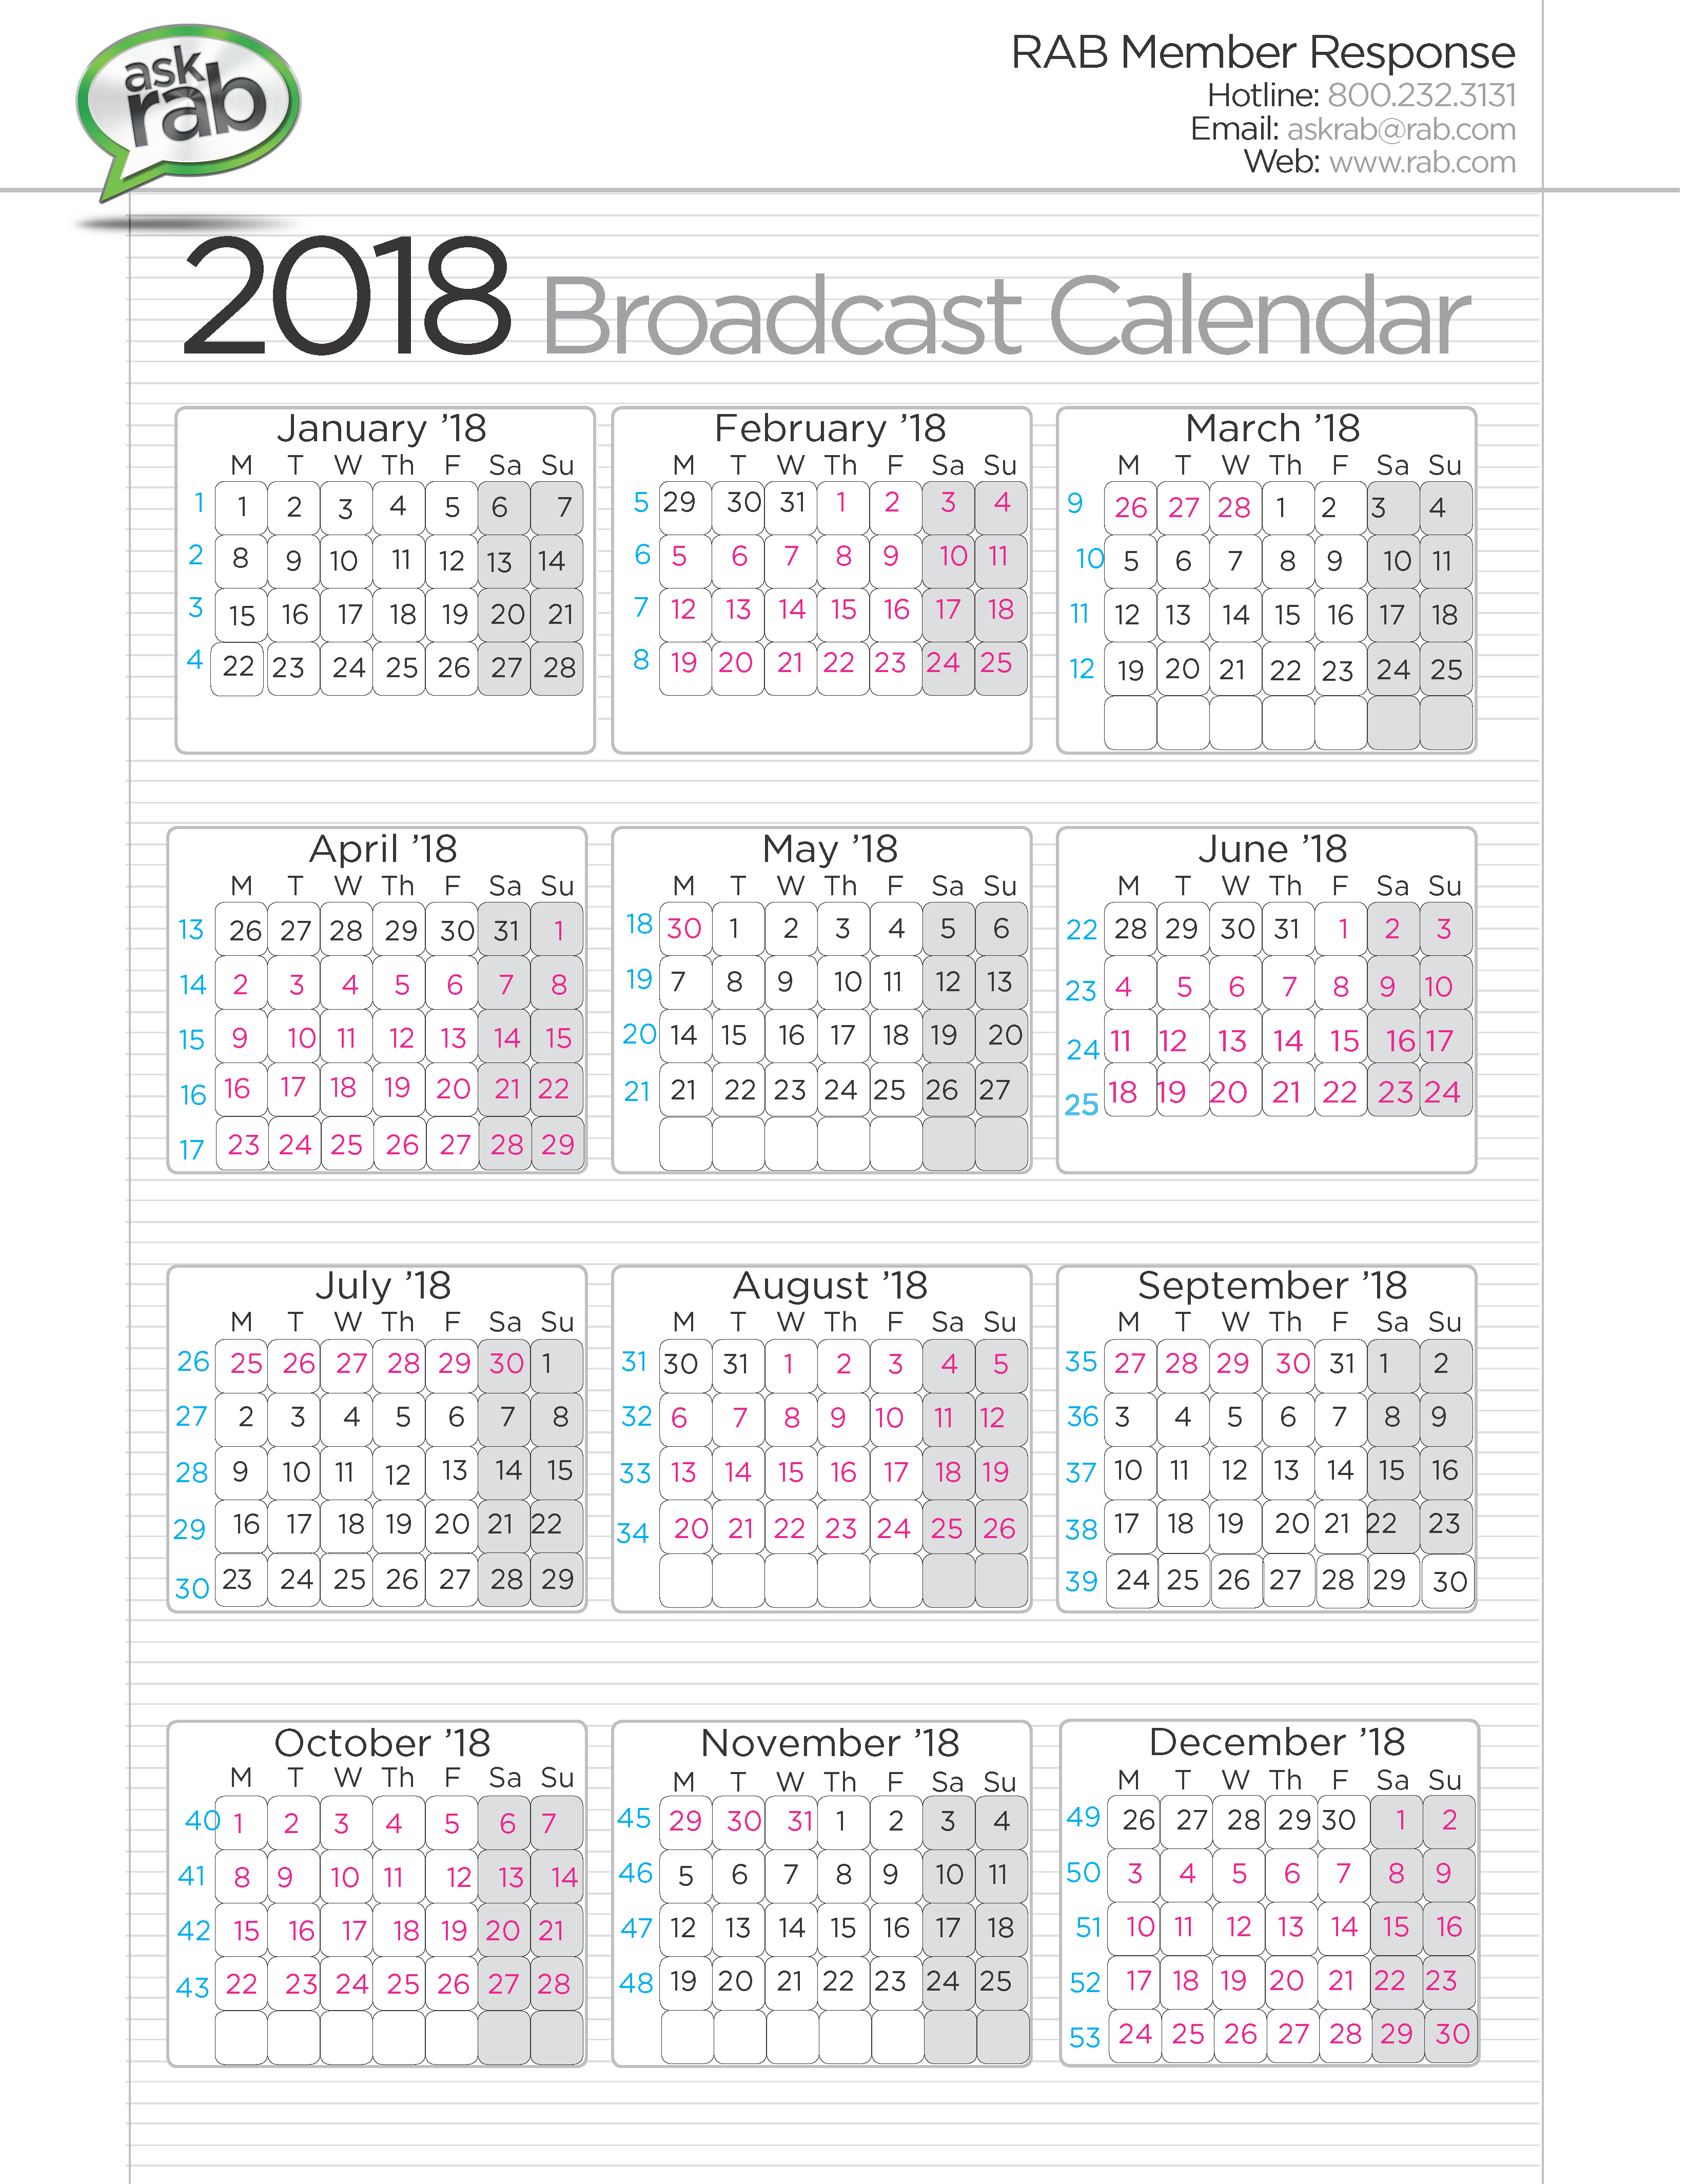 Broadcast Calendars | RAB.com